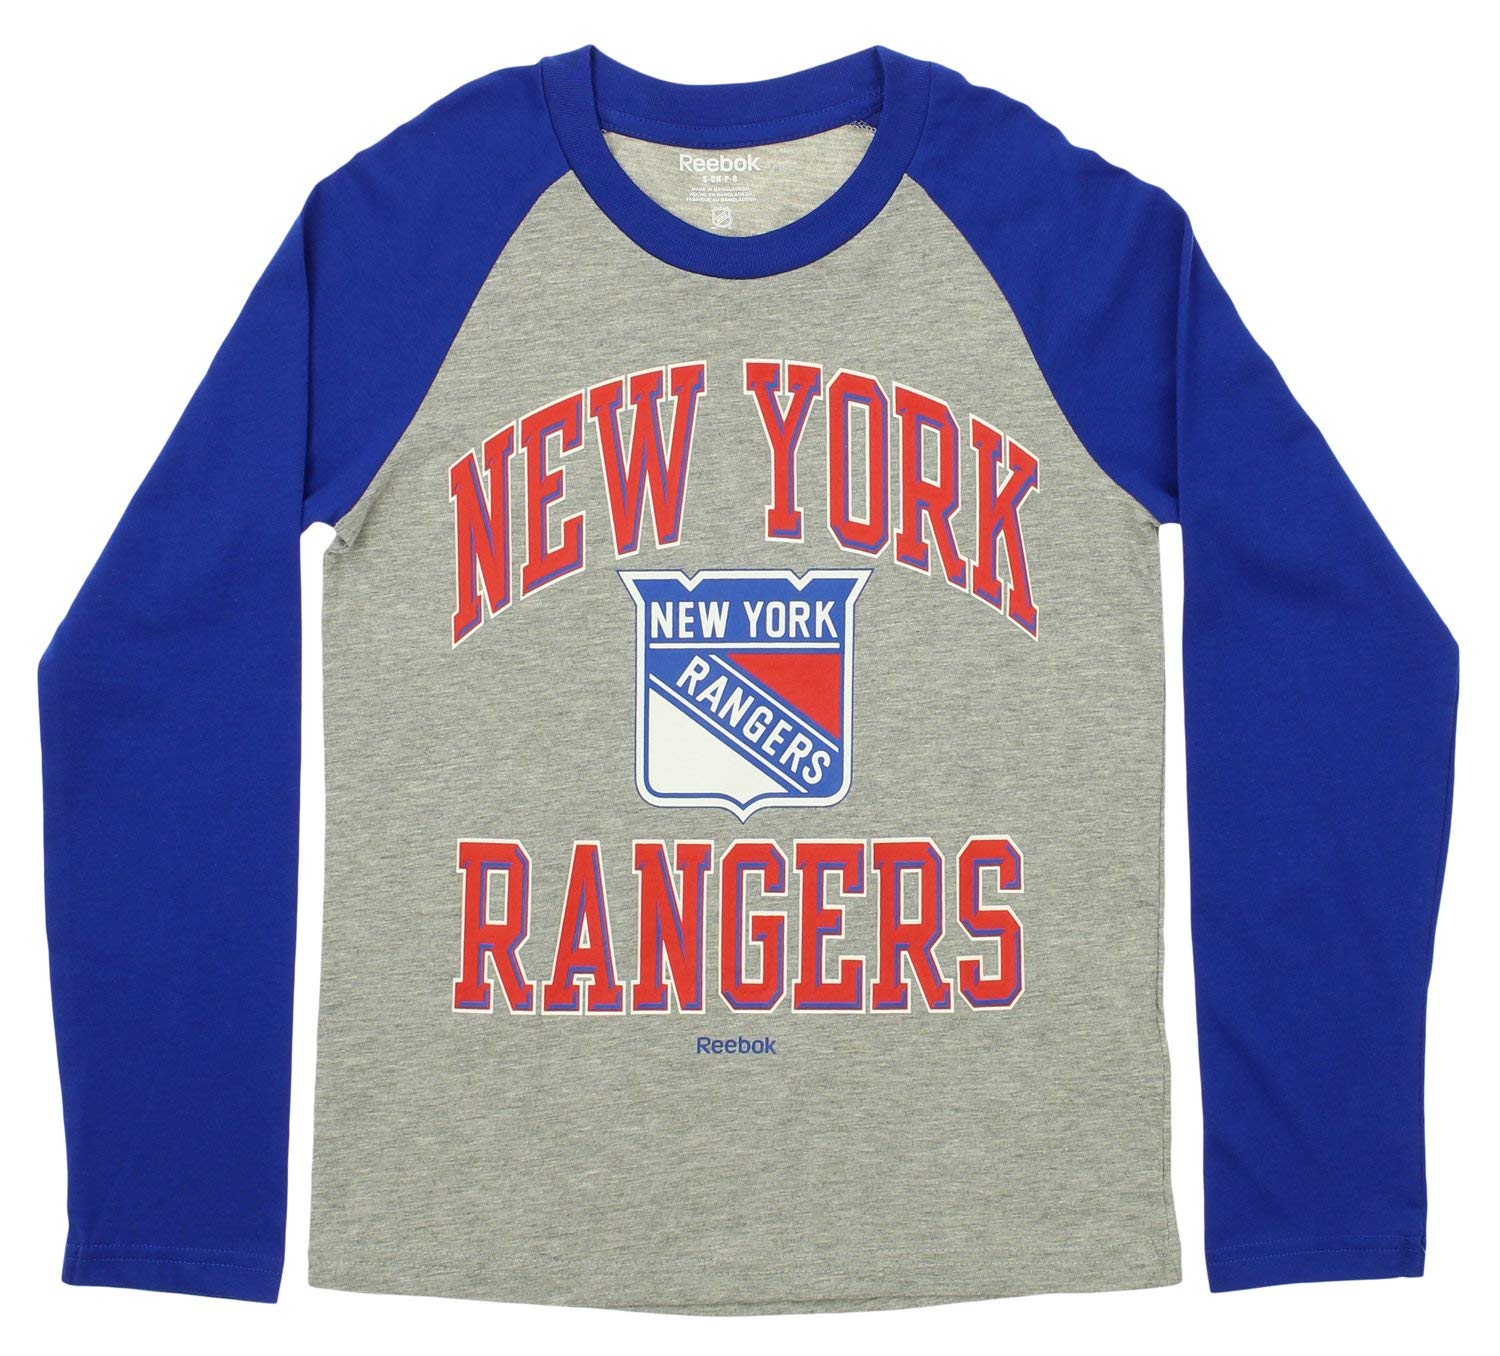 Reebok Blue NHL New York Rangers Jersey